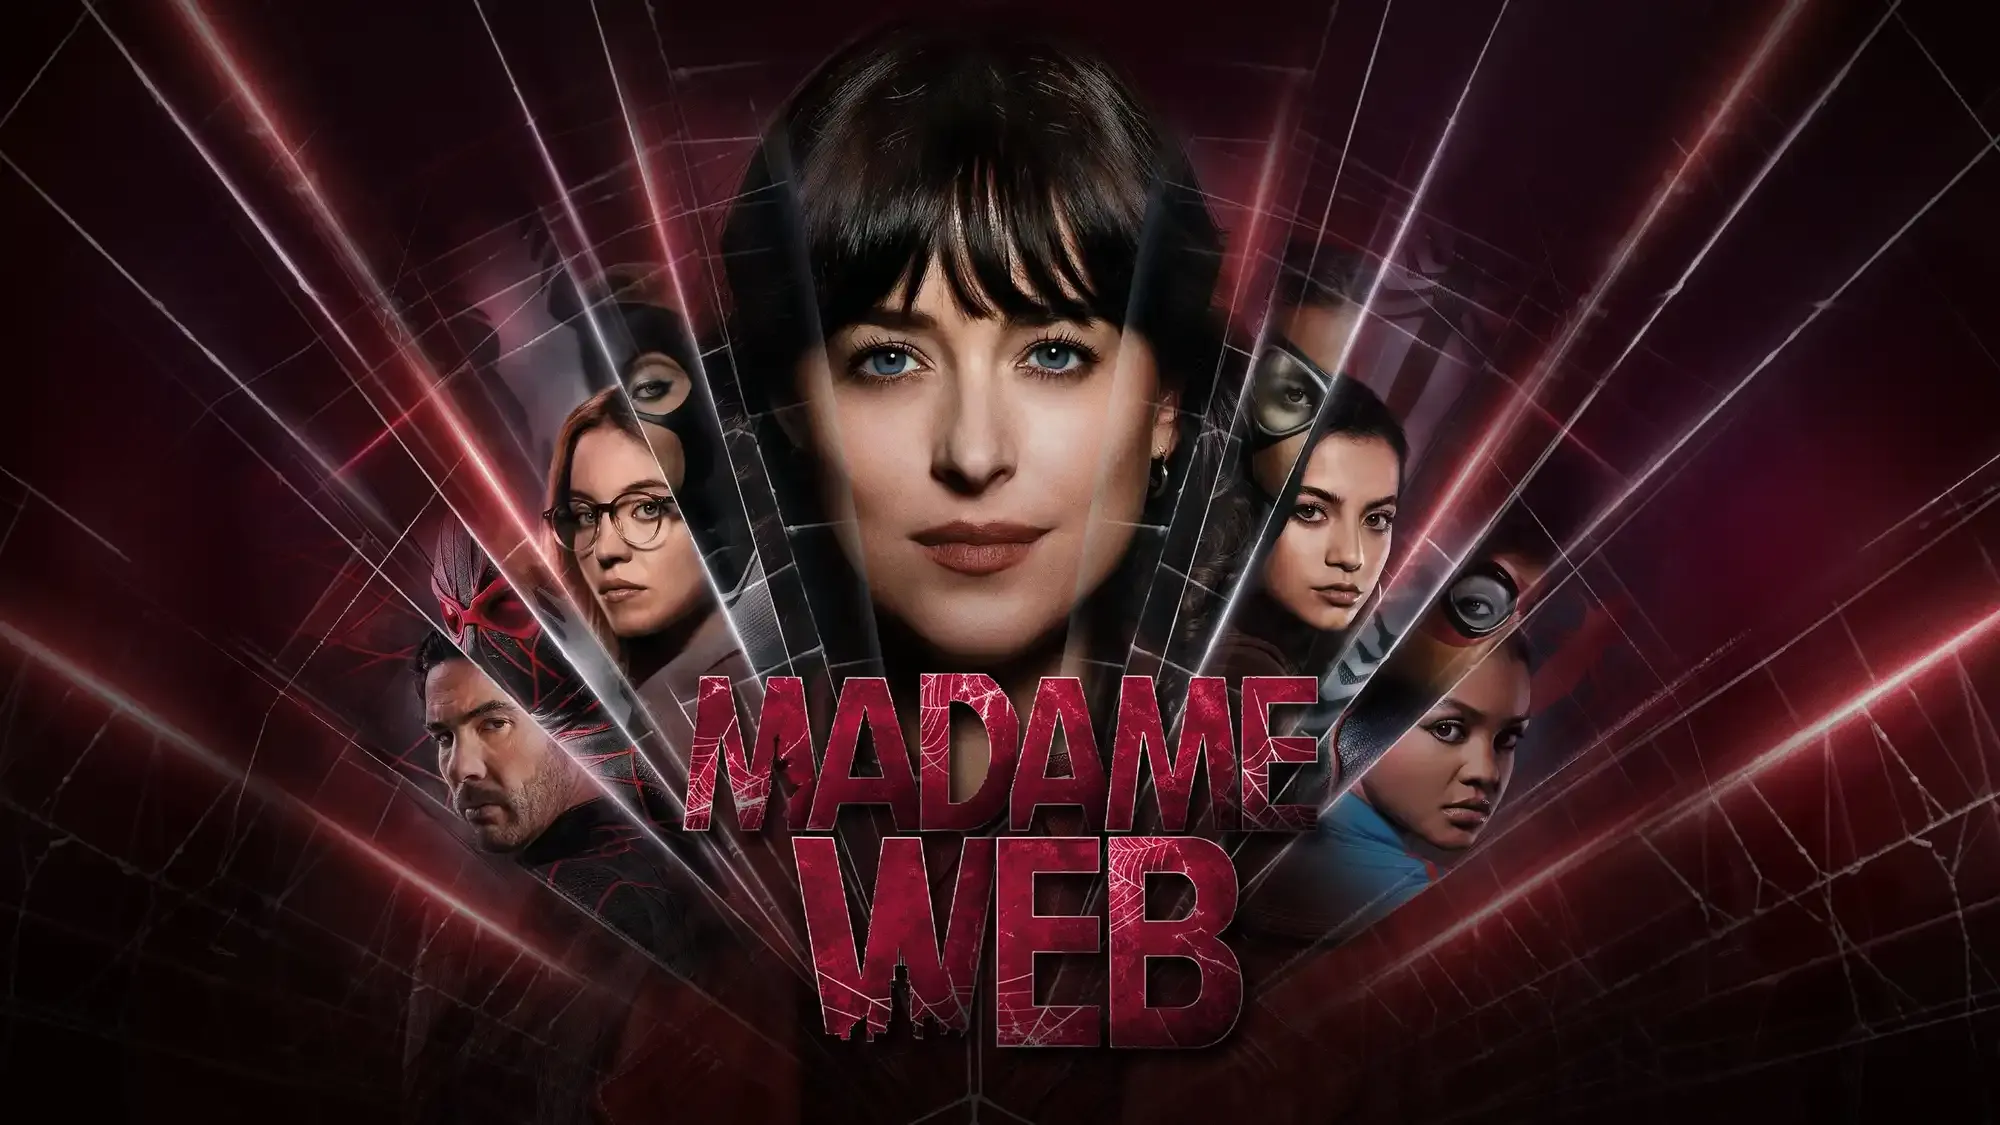 Madame Web movie review